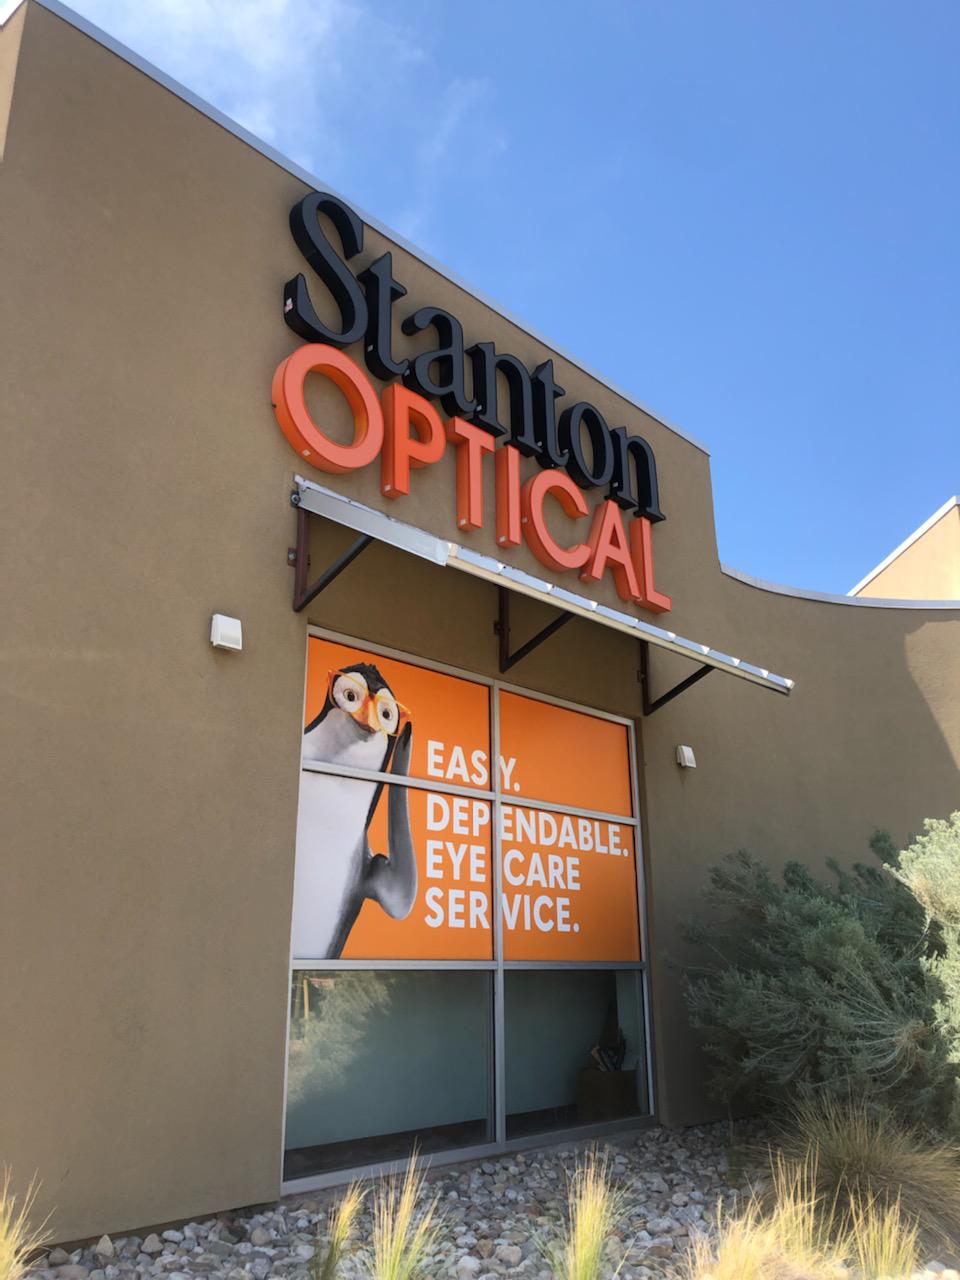 Storefront at Stanton Optical store in Albuquerque, NM 87114